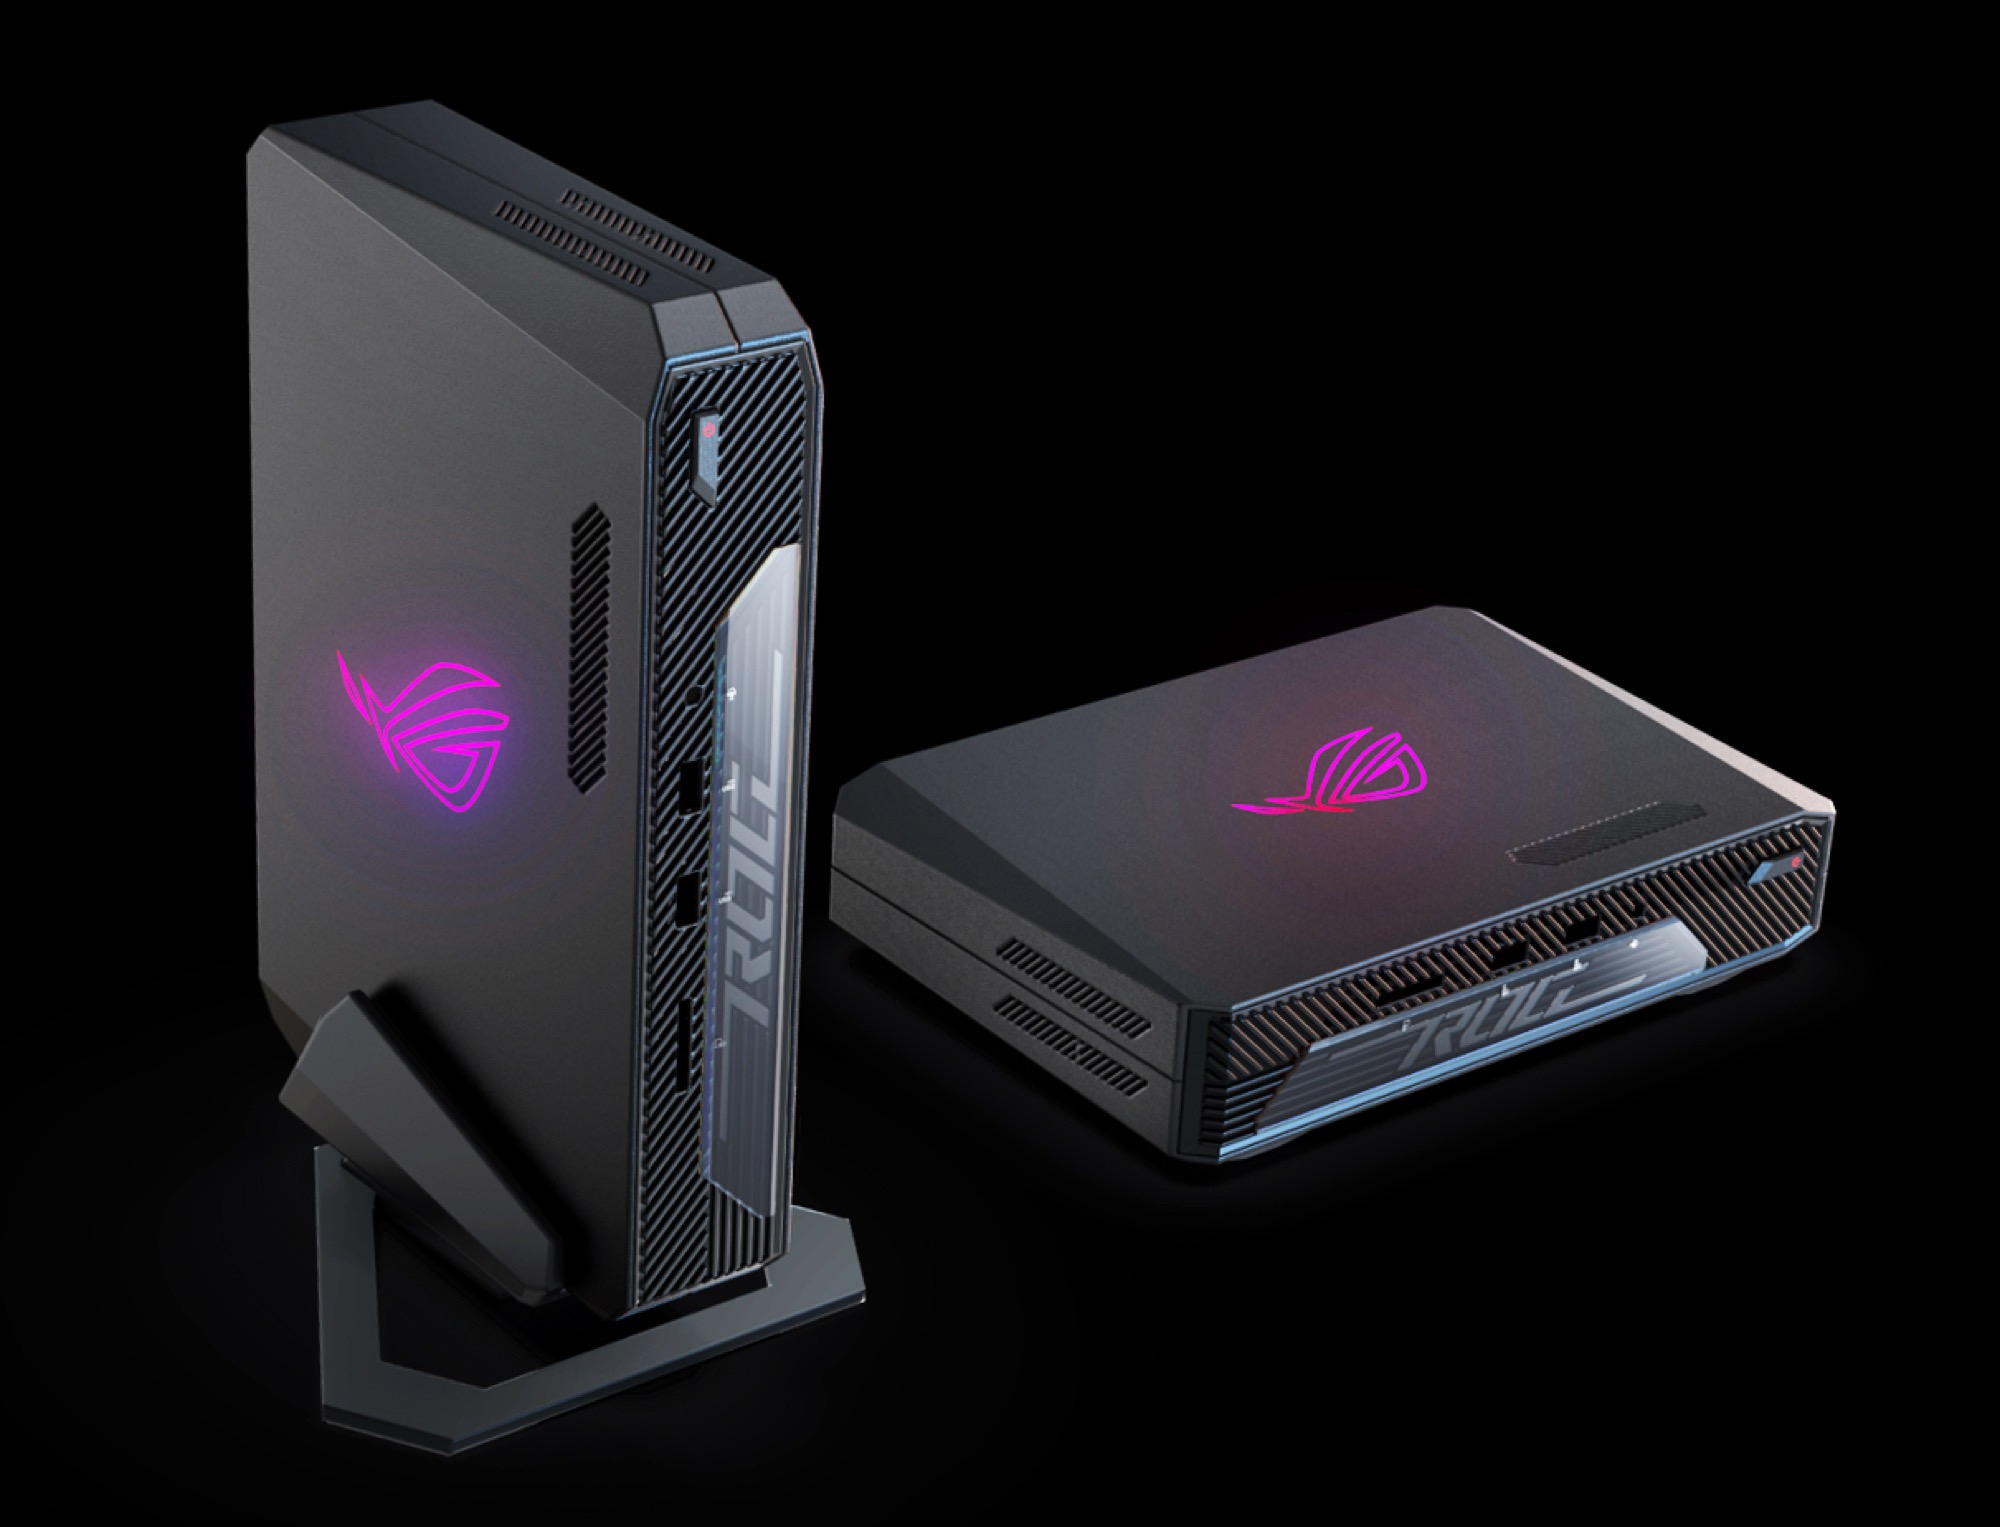 ASUS ROG NUC: New mini-PC packs NVIDIA GeForce RTX 4070 and Intel